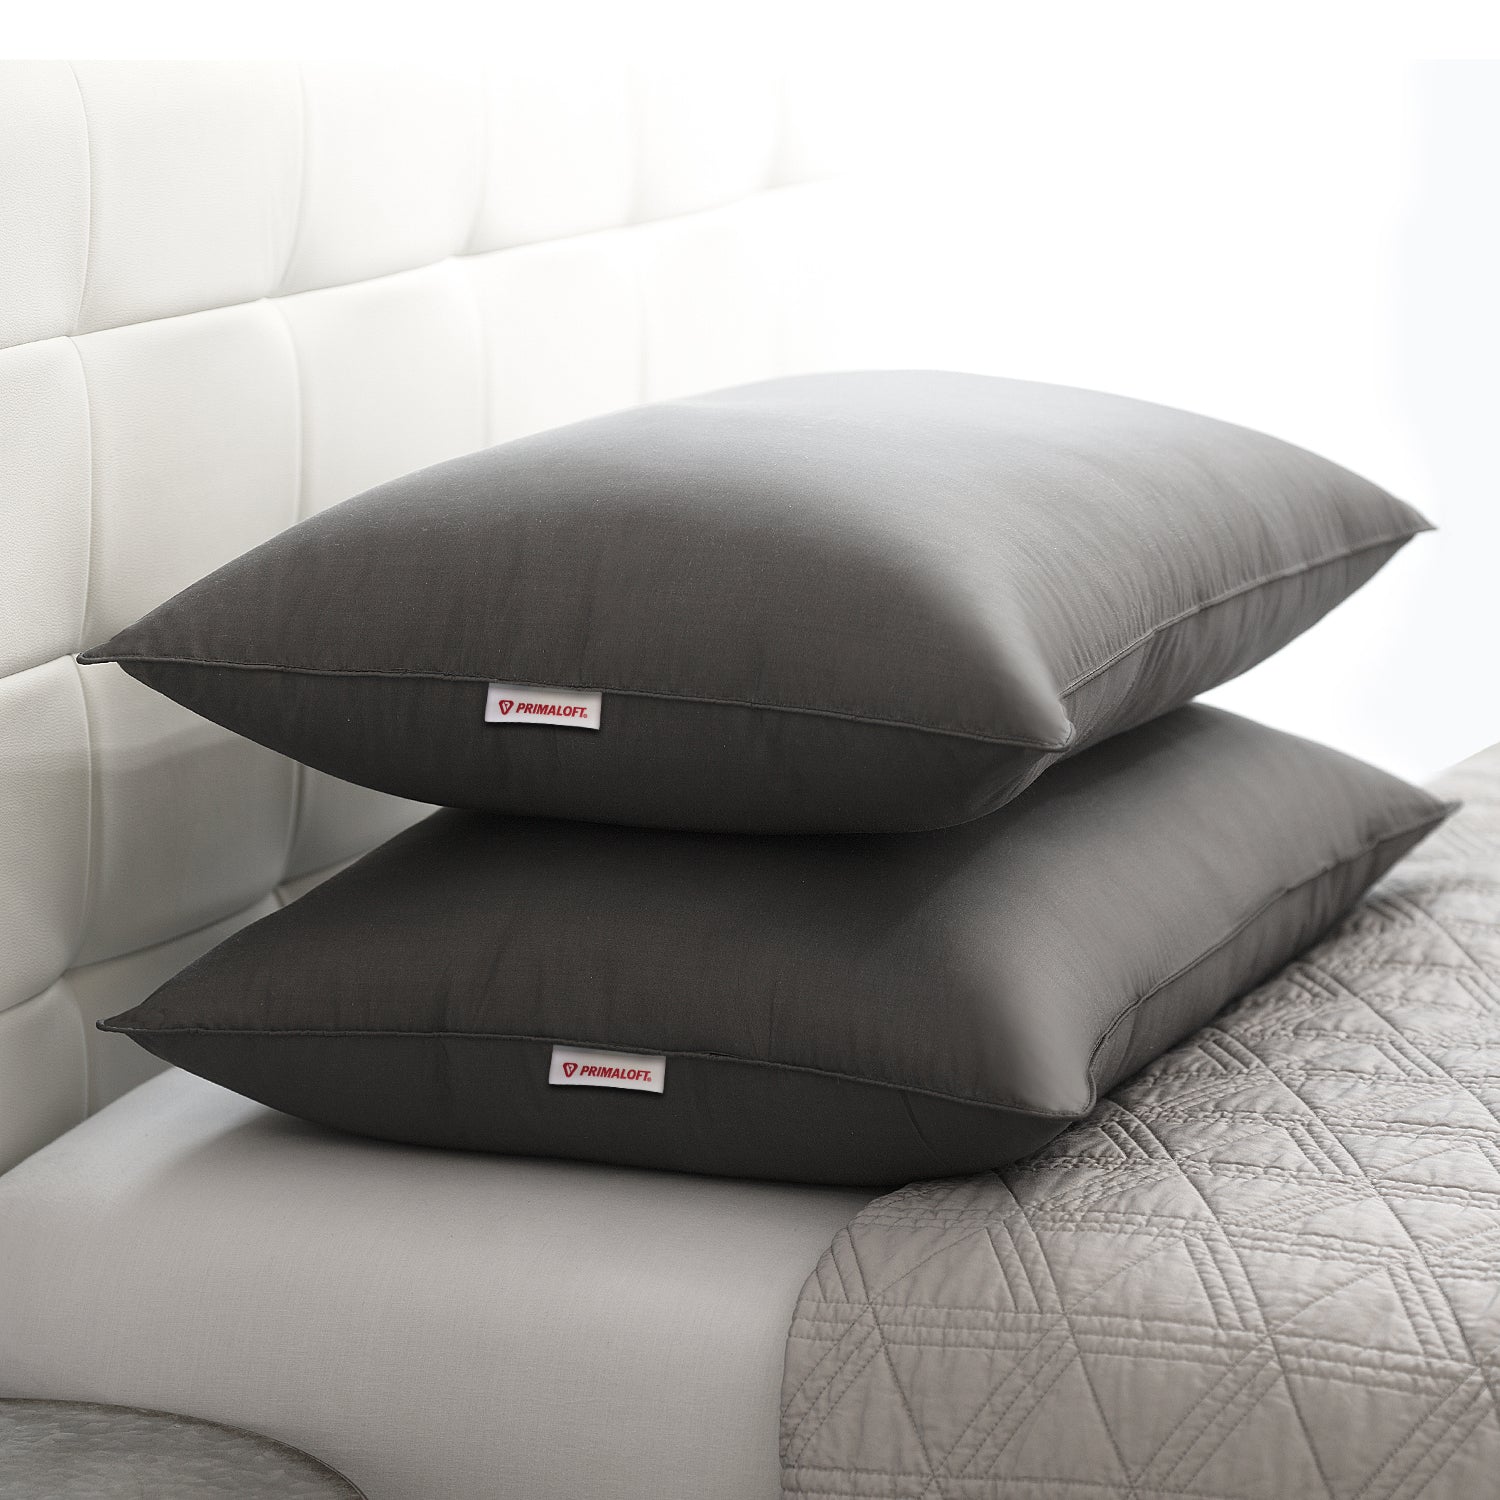 Graphene Deep Sleep Pillow with Primaloft®